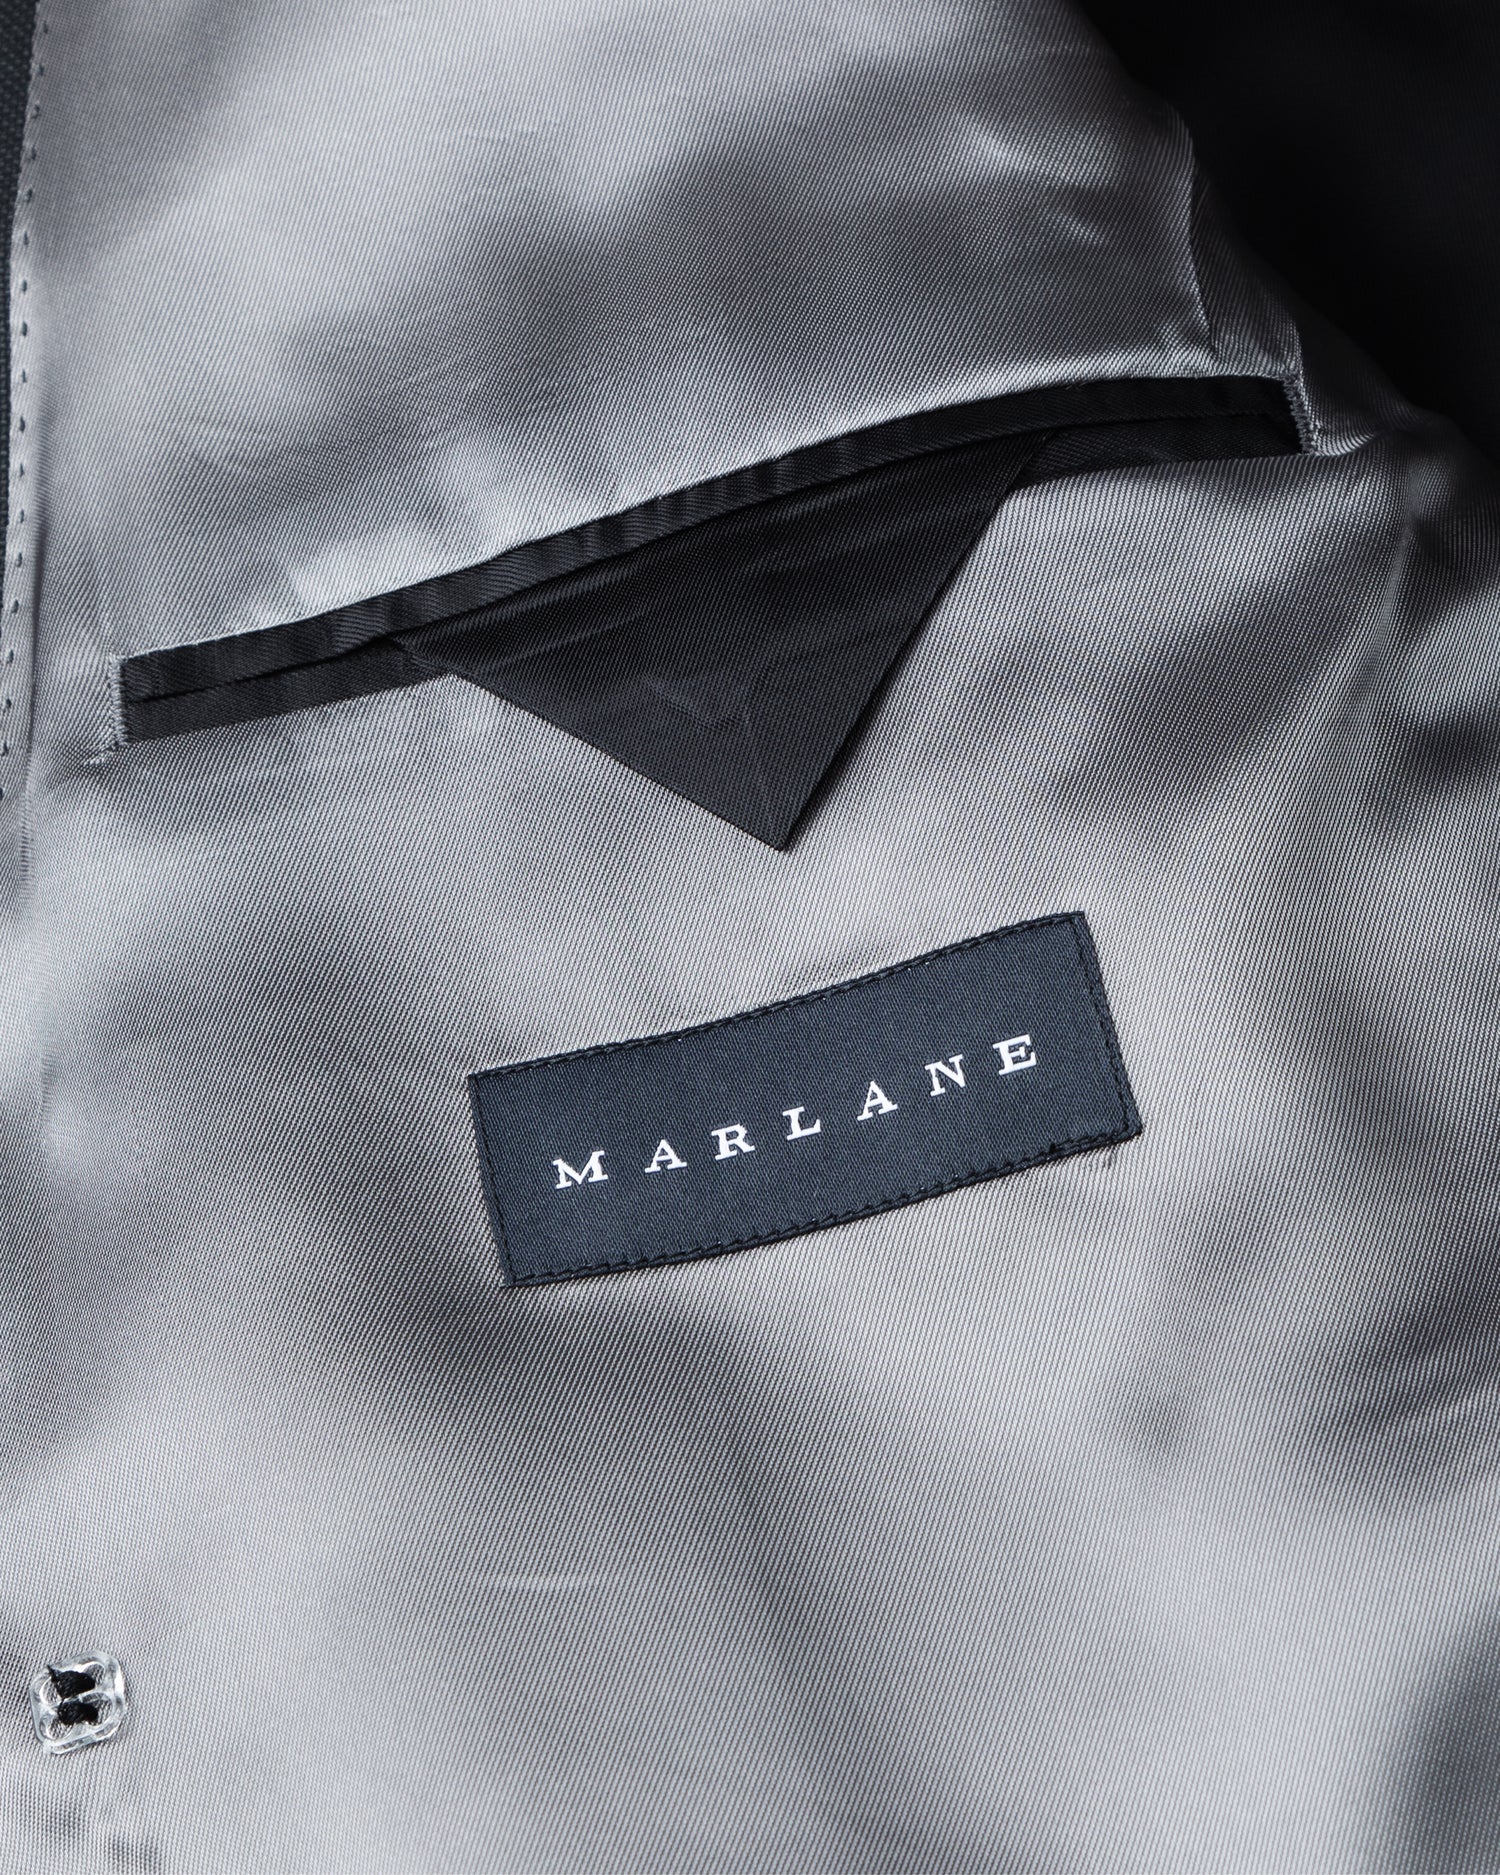 Elegant Doublebreasted Modern Fit Suit in Premium Wool by Marlane (8459000381770)